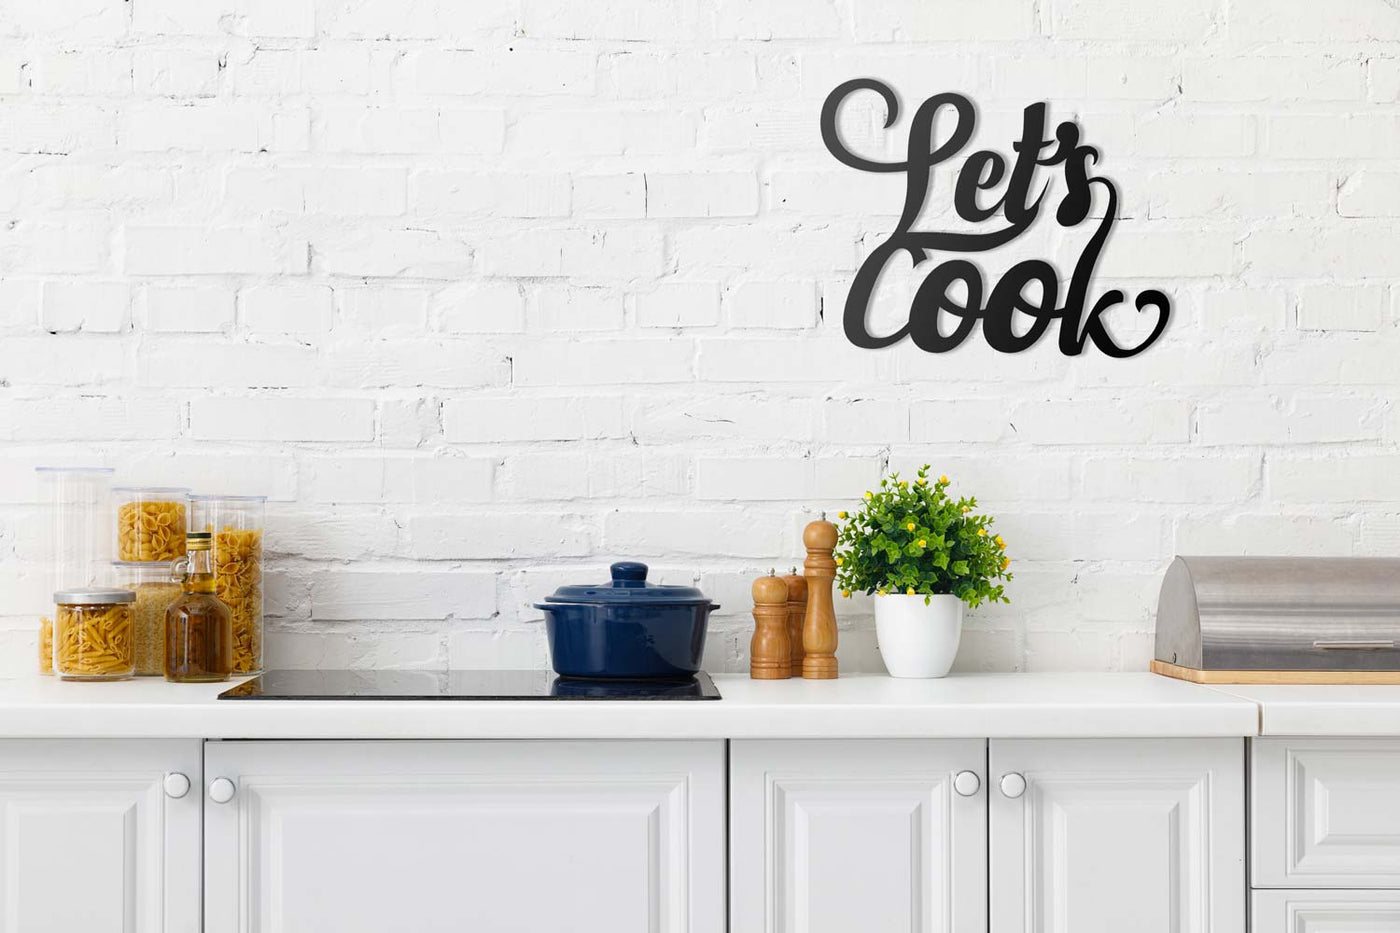 Cursive Let's Cook decorative sign for kitchen